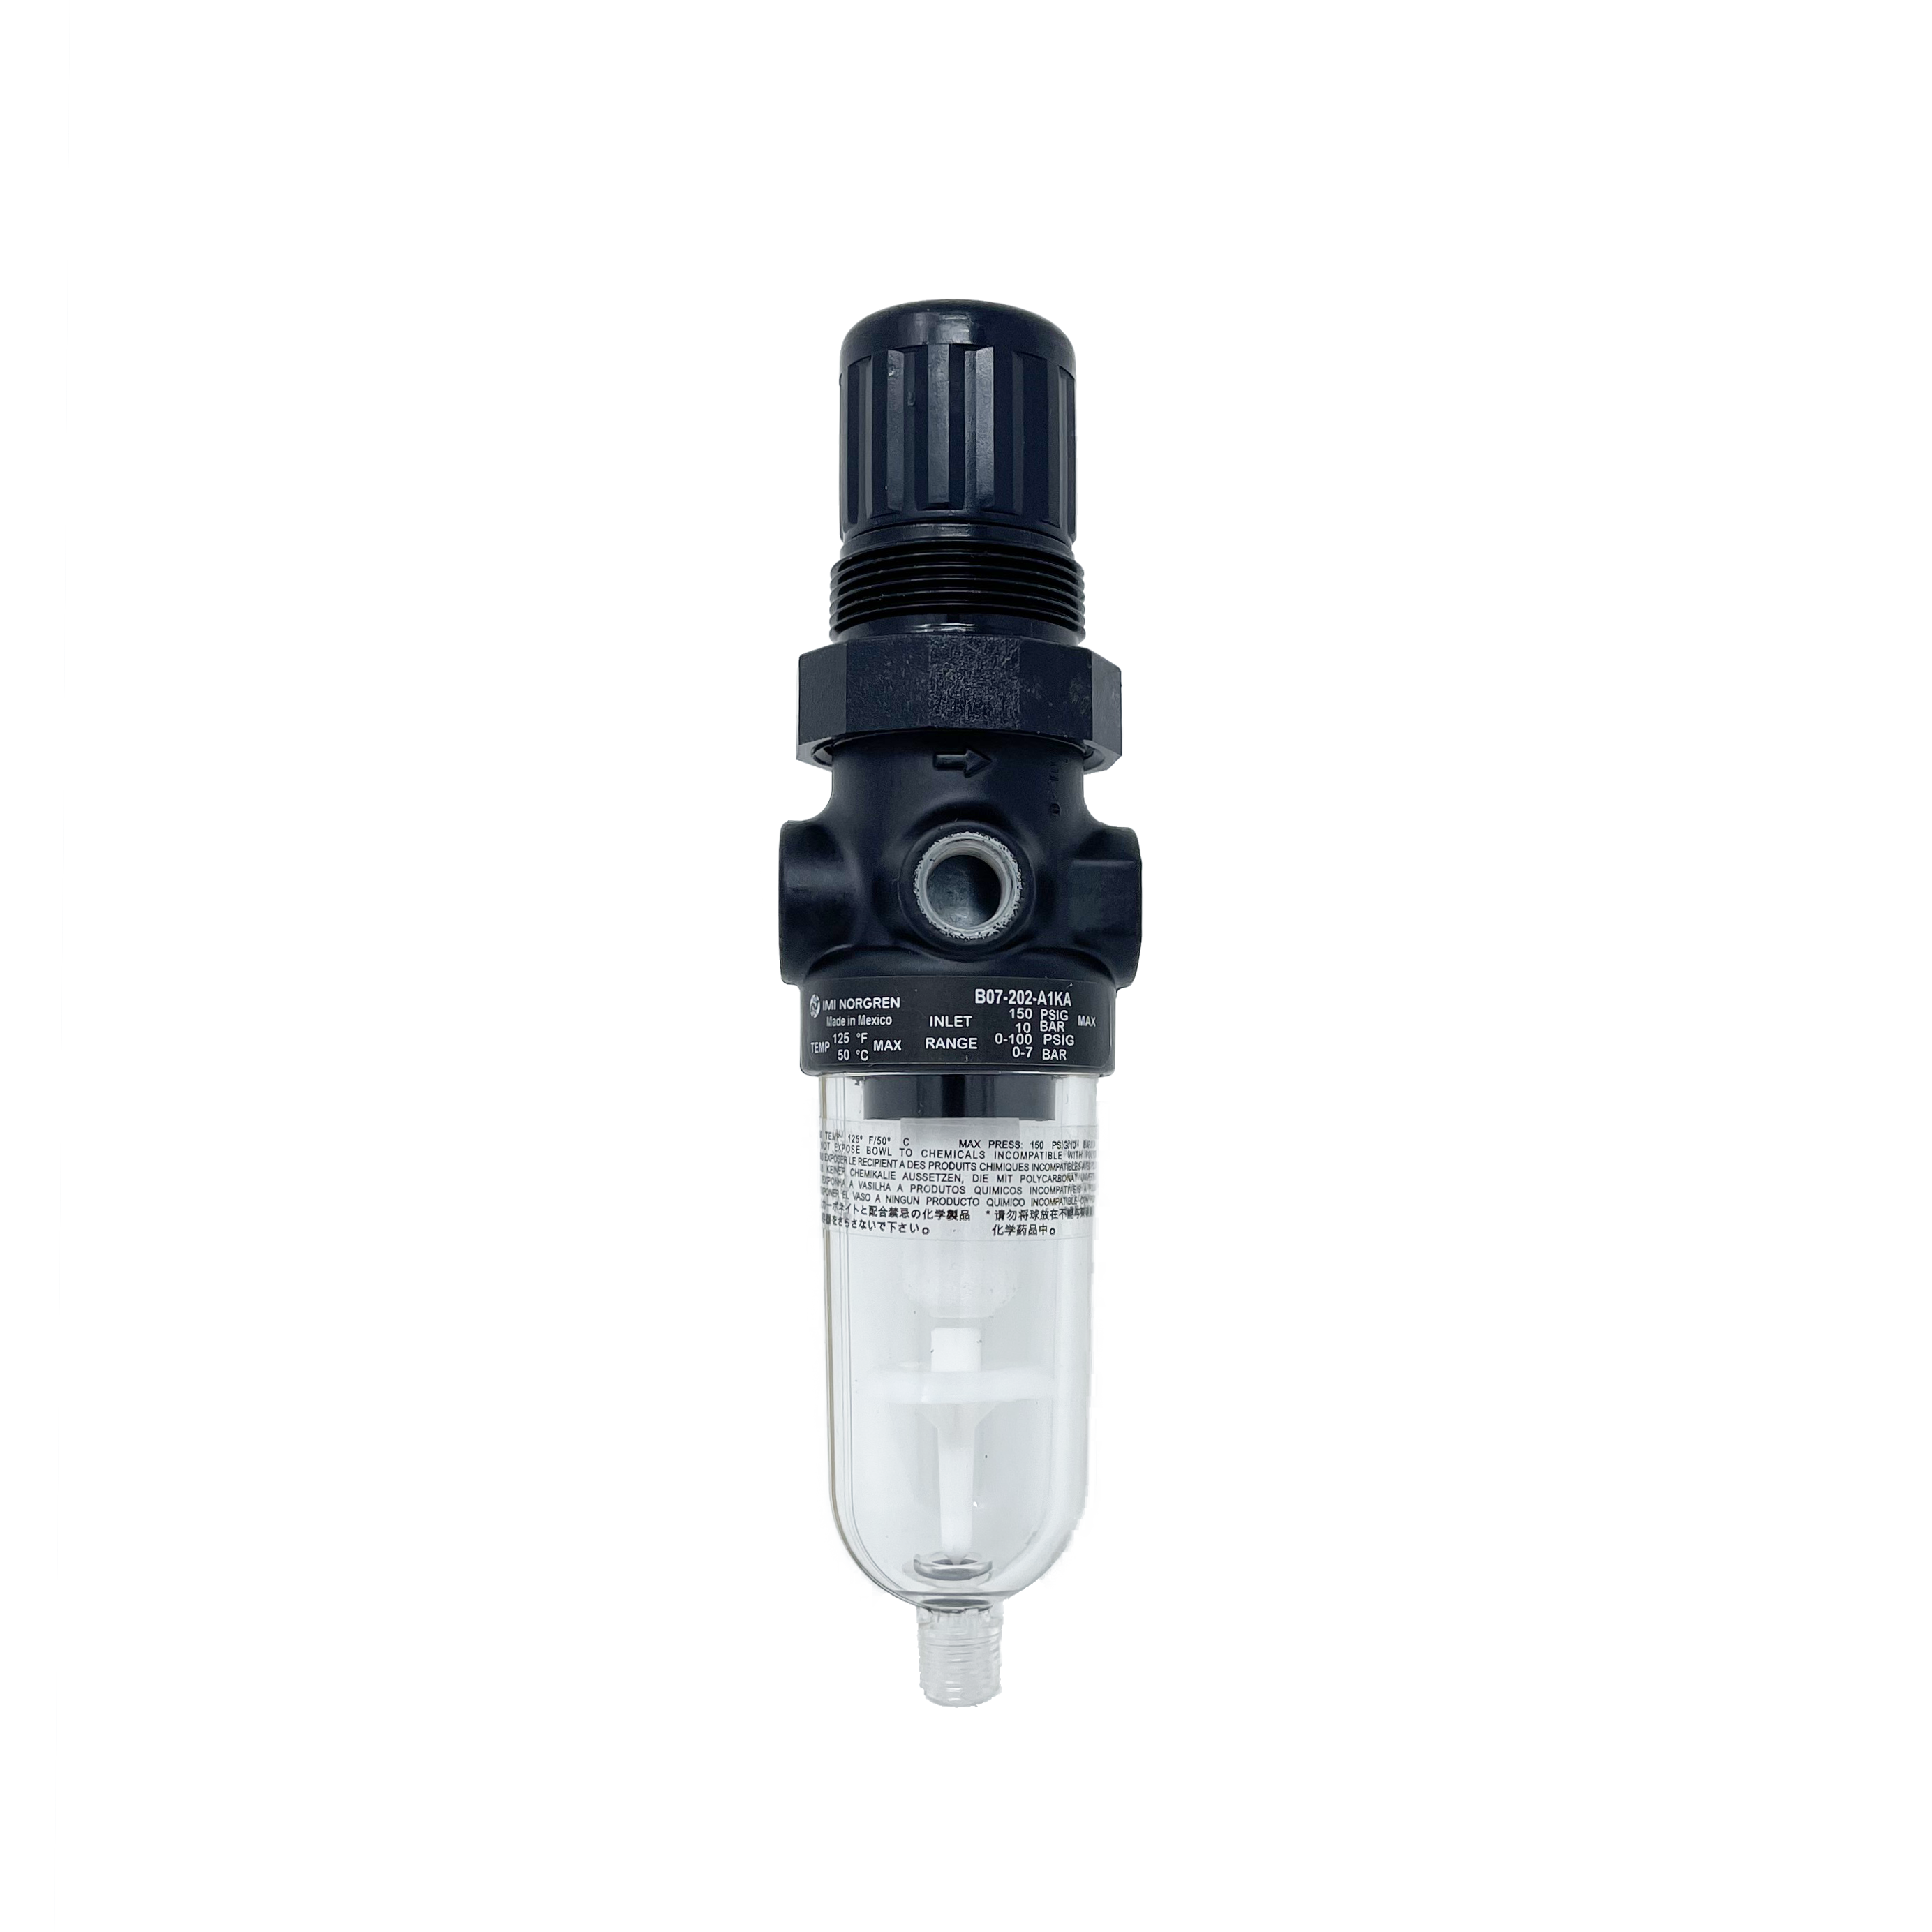 B07-101-A1KA : Norgren B07 miniature filter/regulator, Transparent Bowl, Relieving, Without Gauge, Automatic Drain, 5-Micron, 5